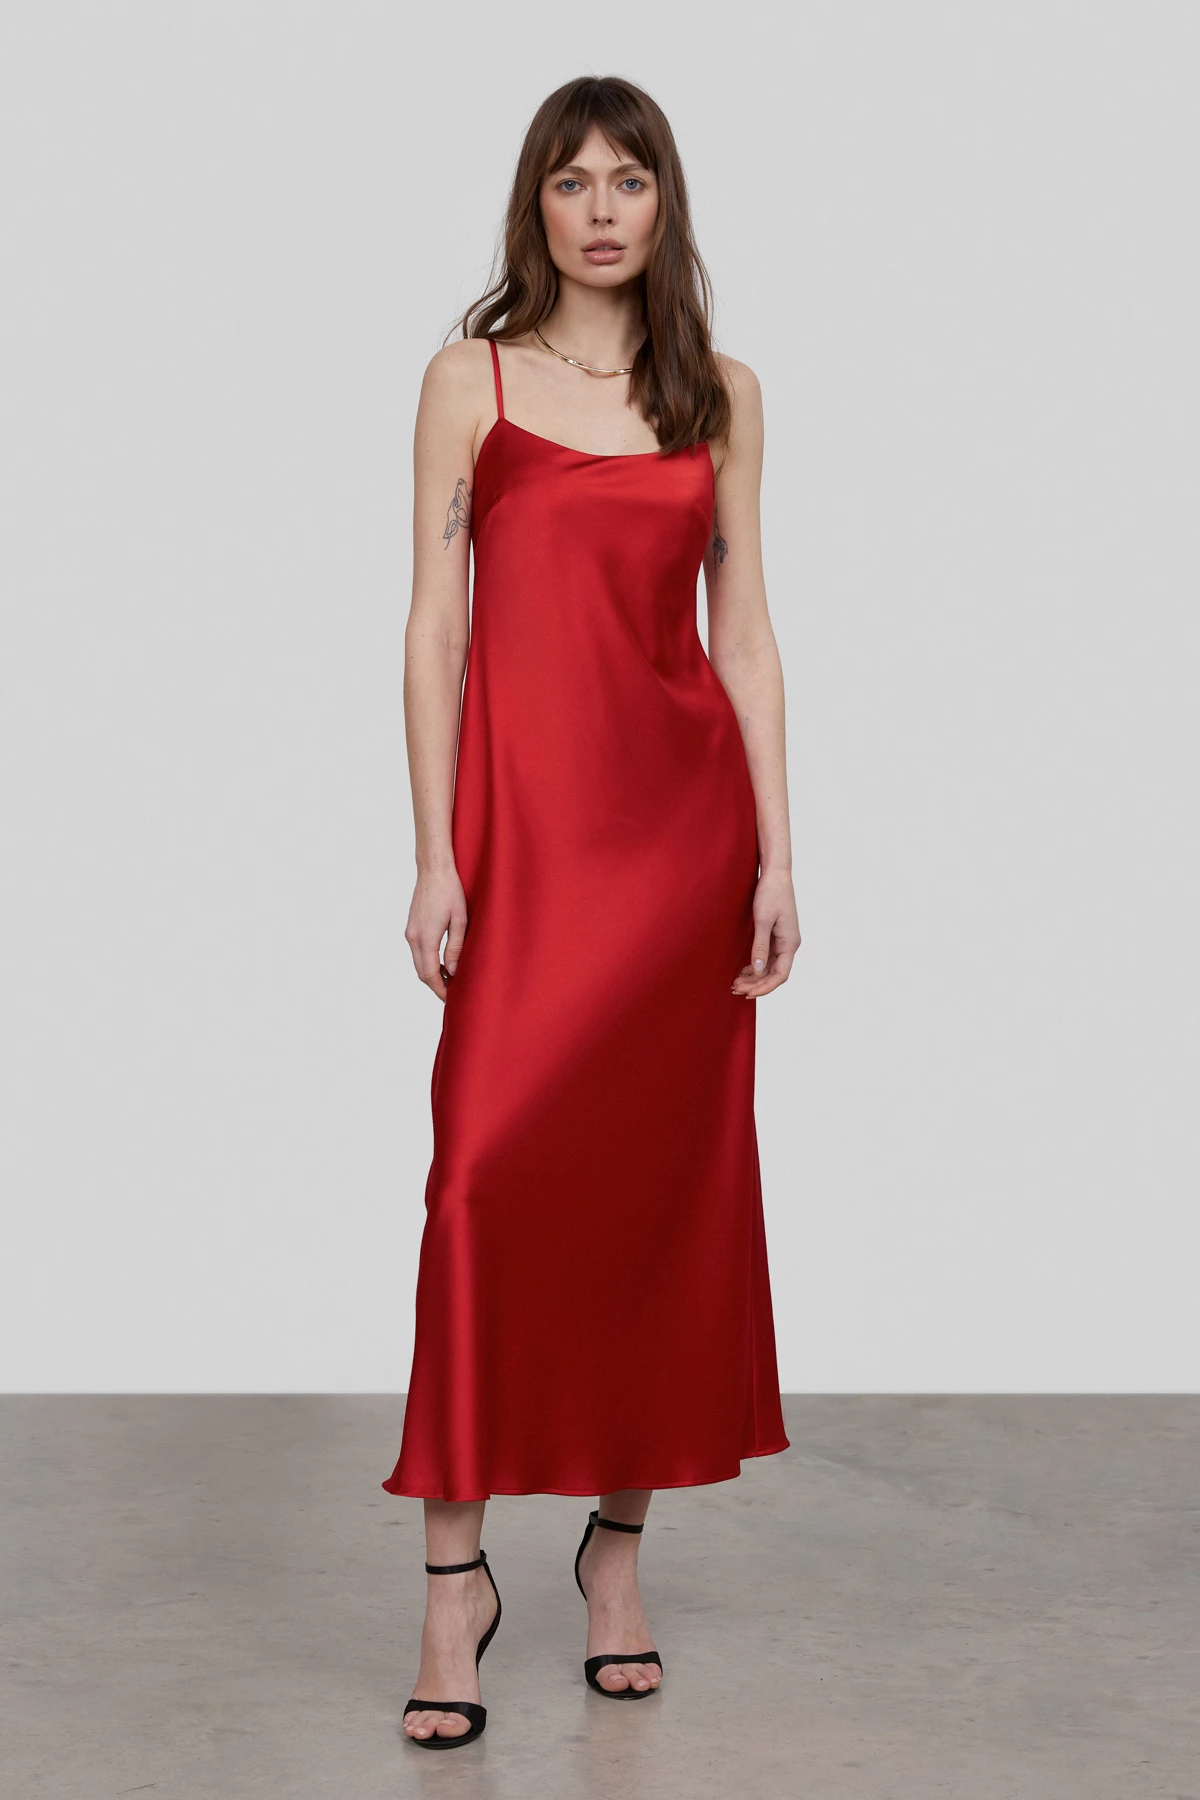 Red satin slip dress, photo 1